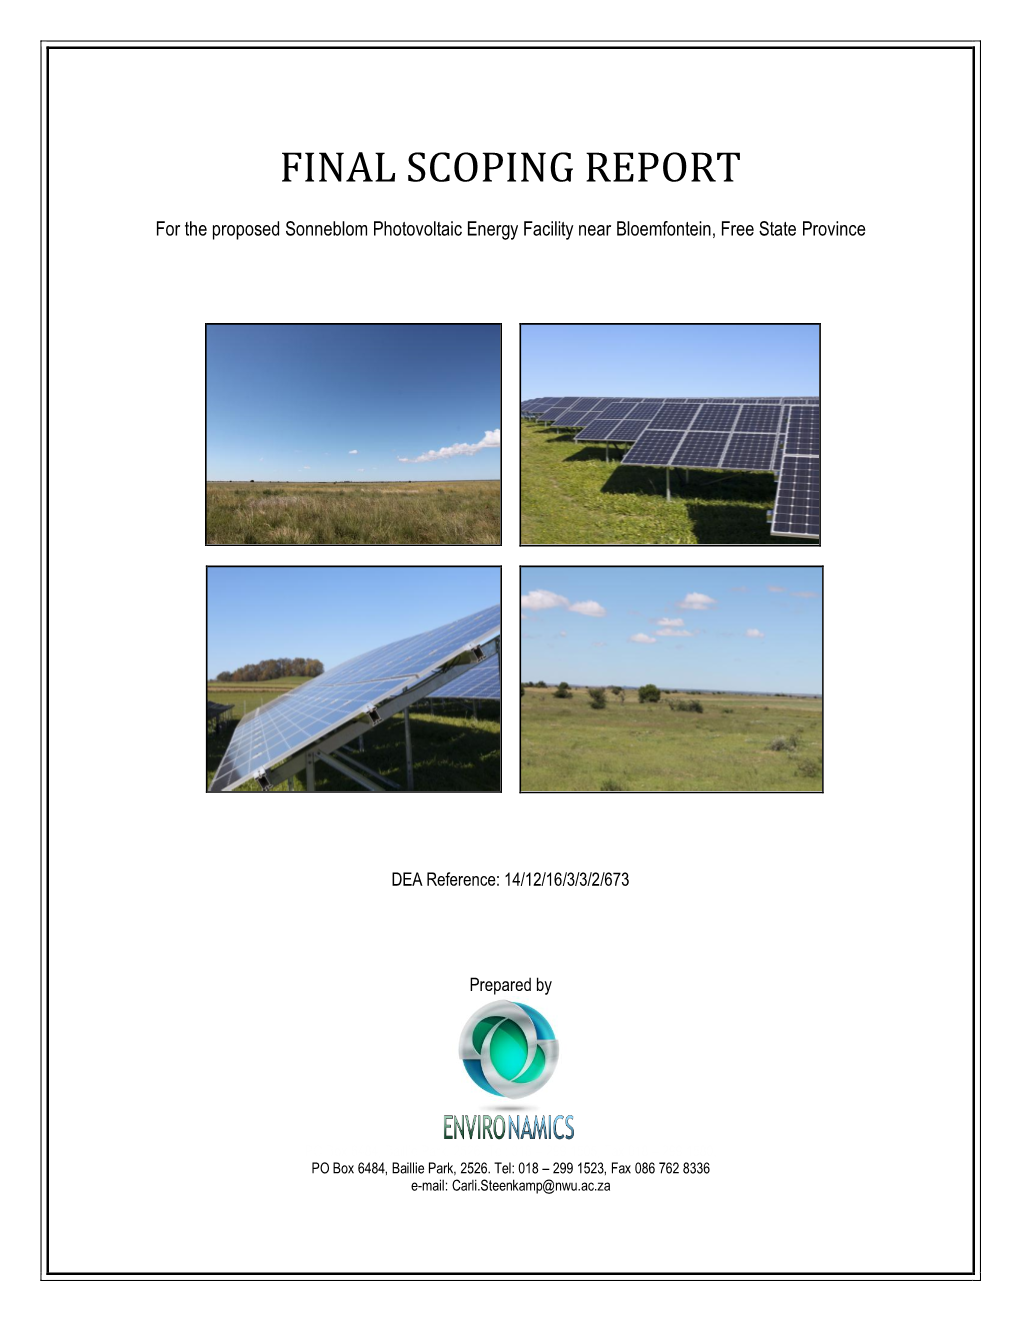 Final Scoping Report